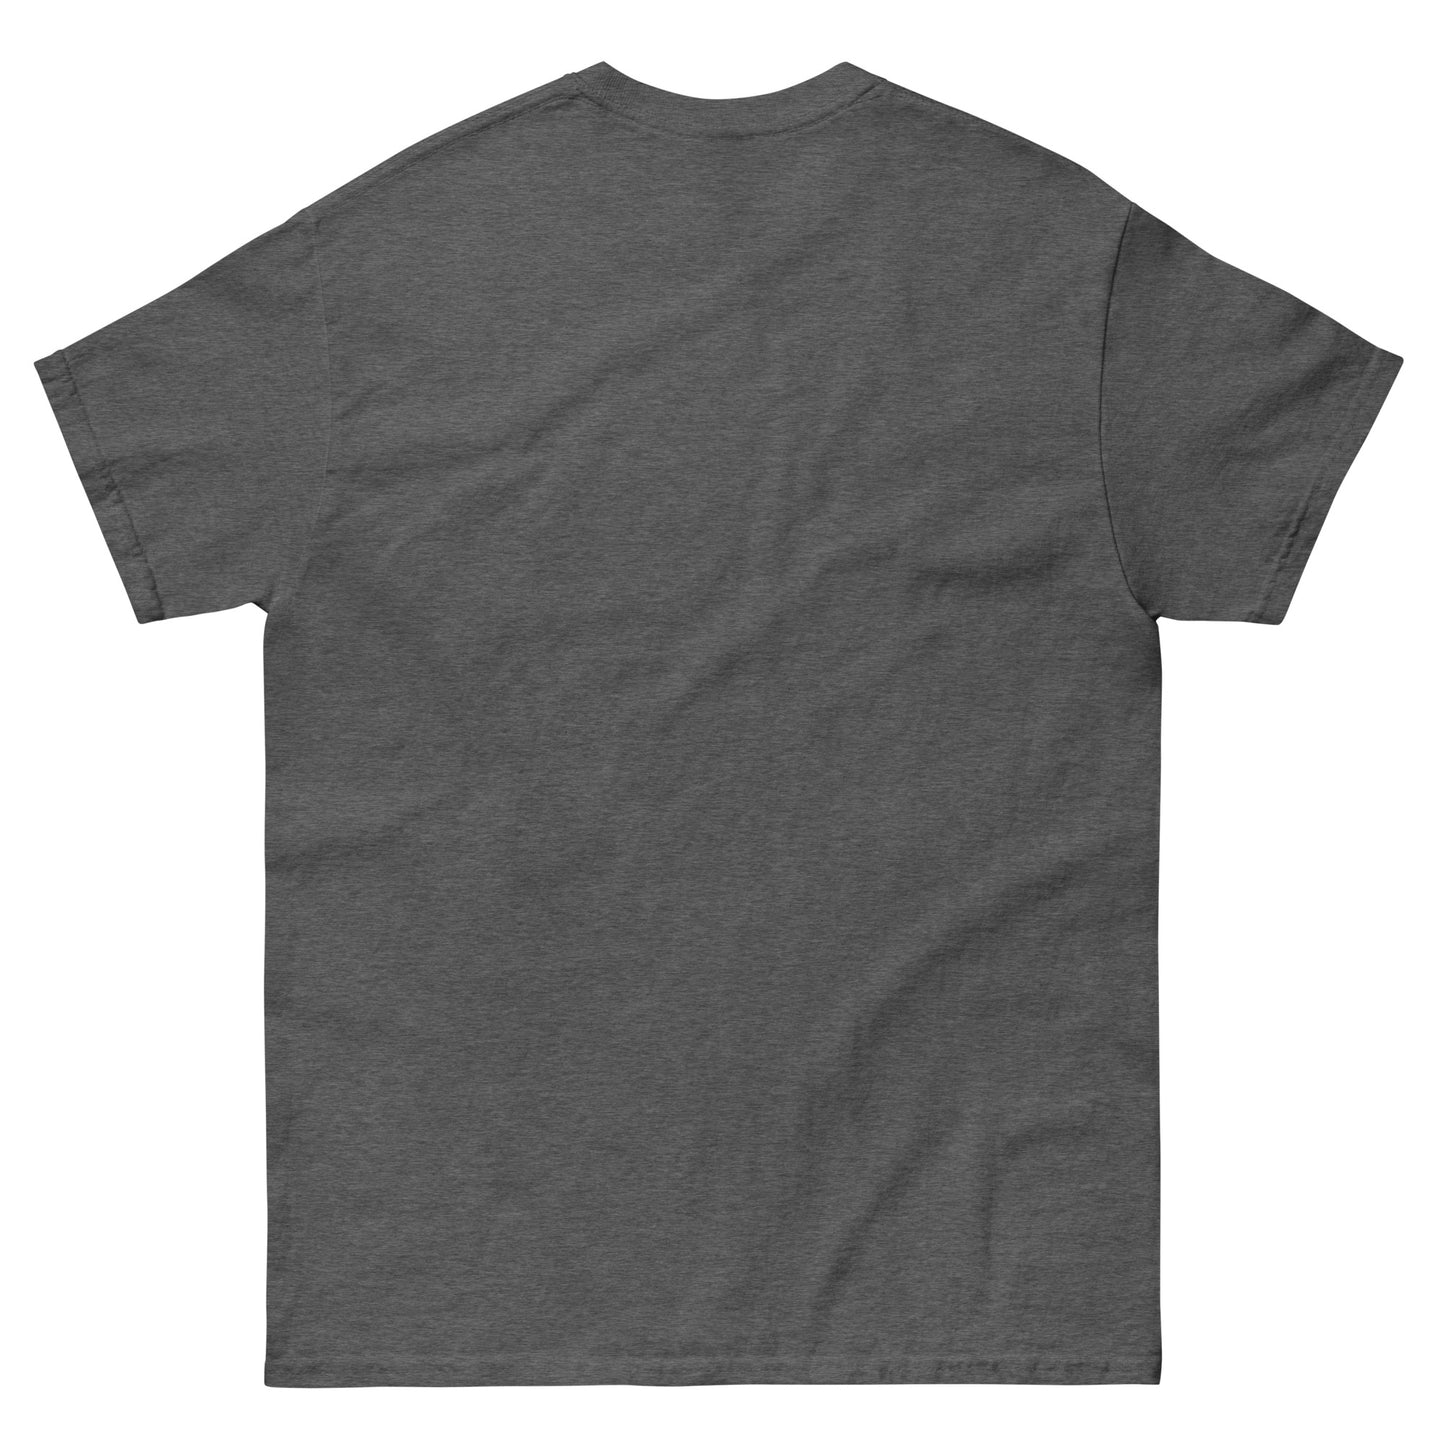 No Fame – klassisches T-Shirt